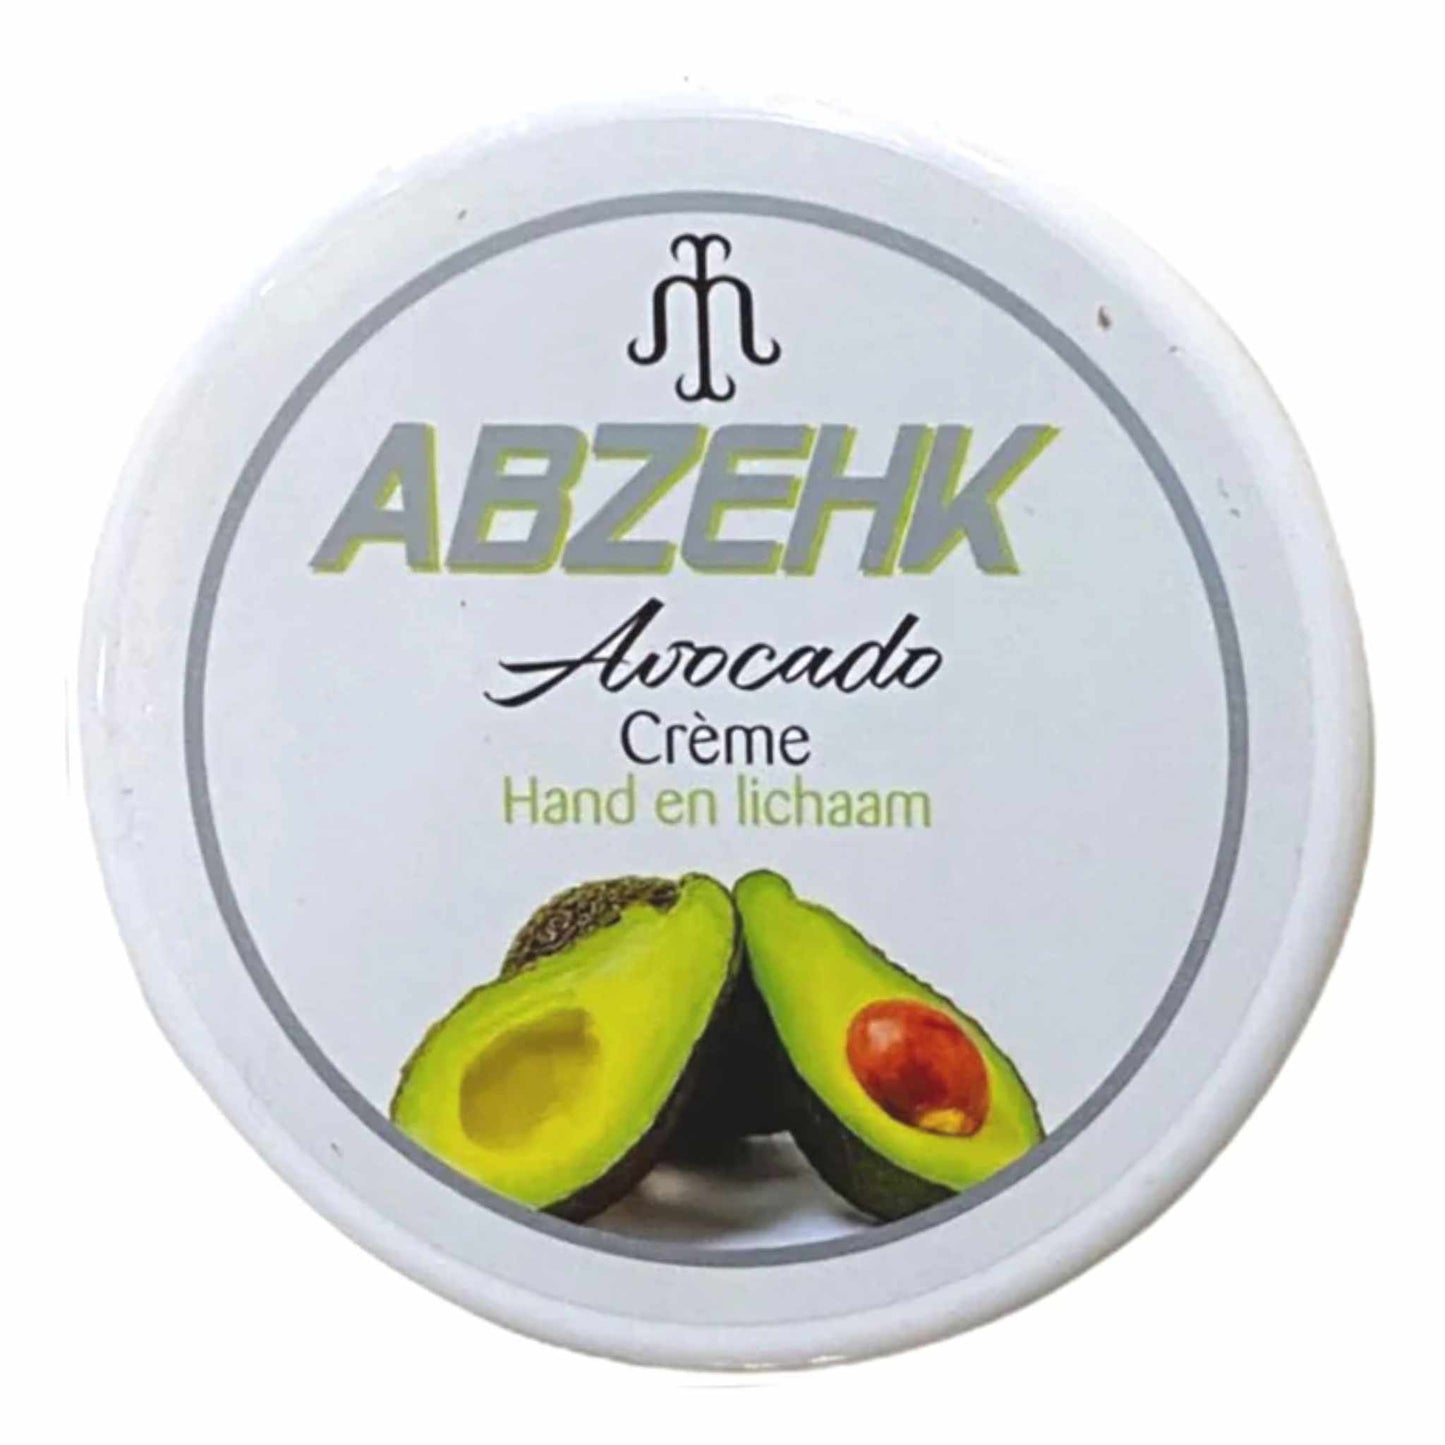 Abzehk Avocado Hand en Lichaamscreme 250 ml